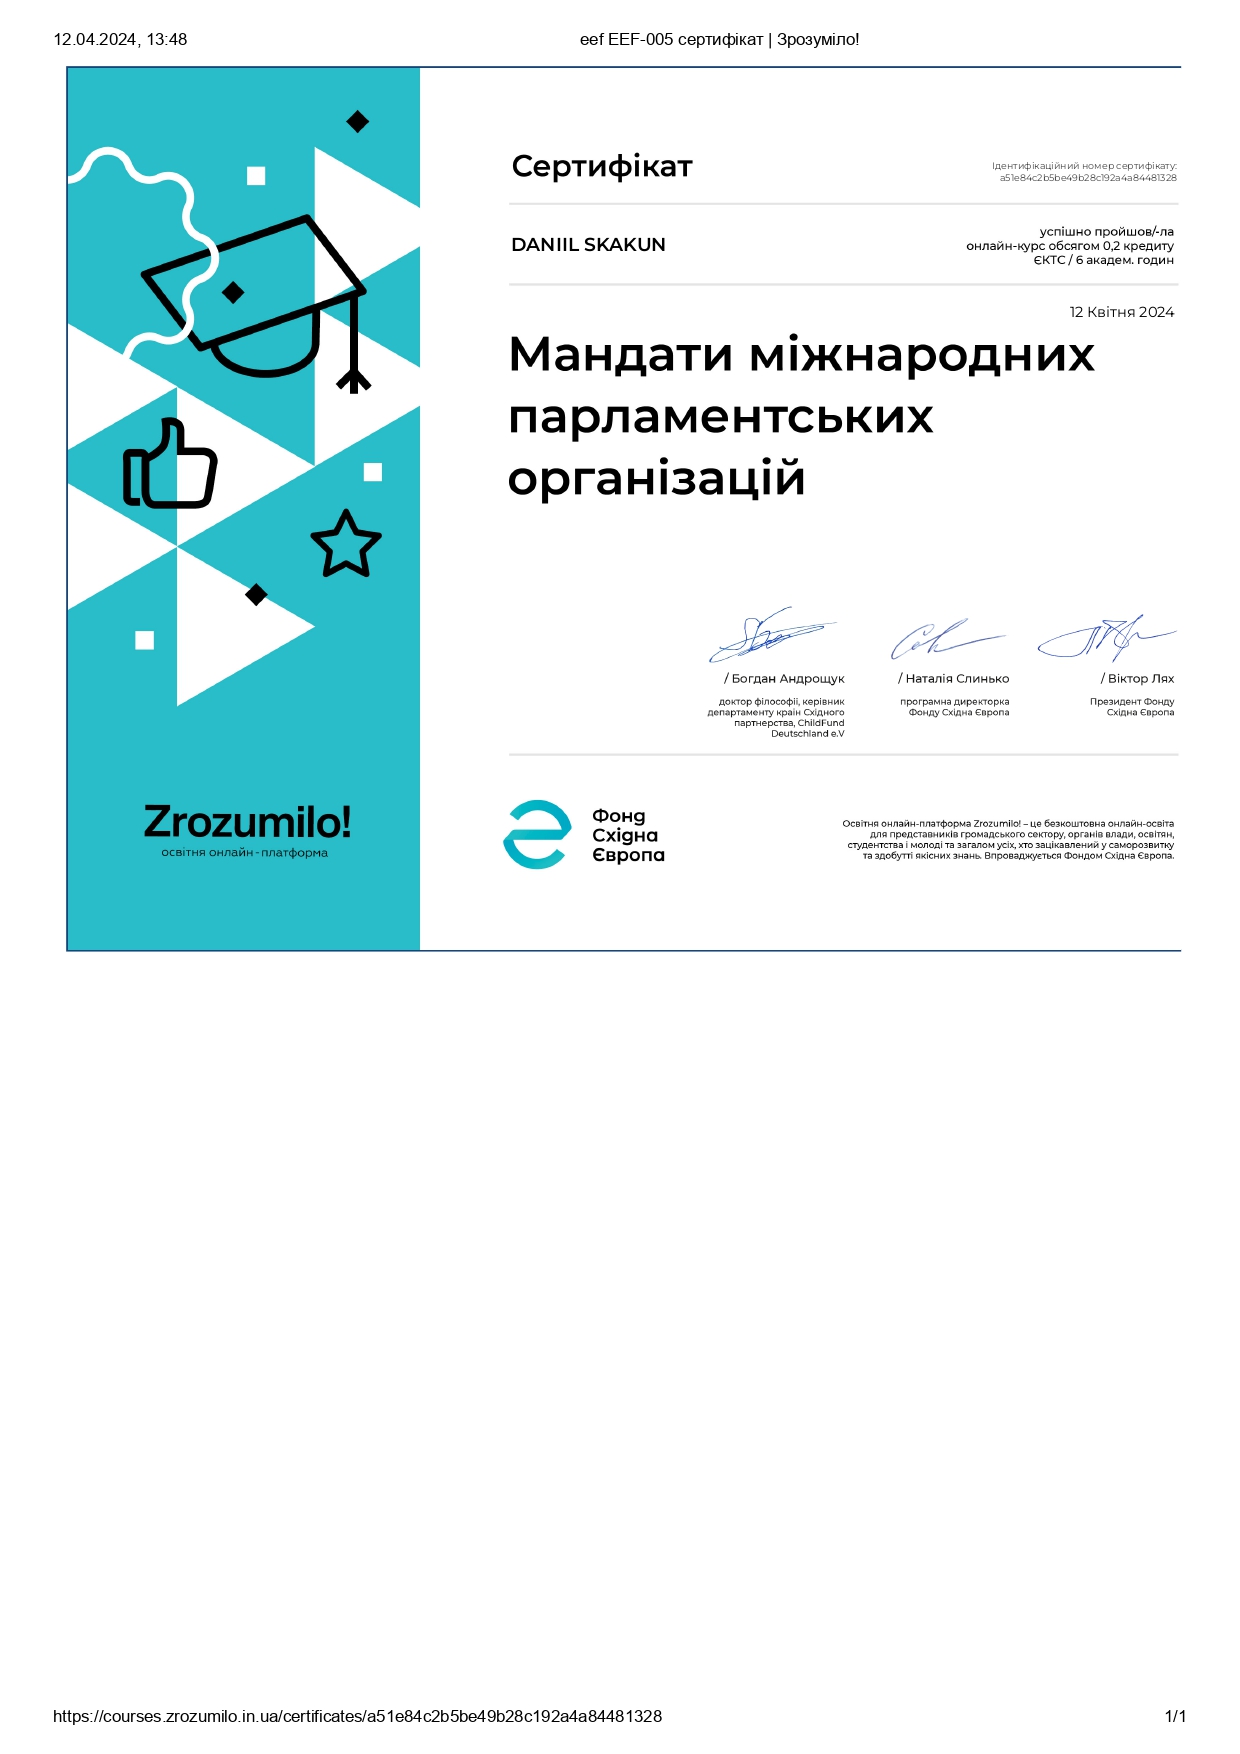 Сертифікат Скакун_page-0001.jpg